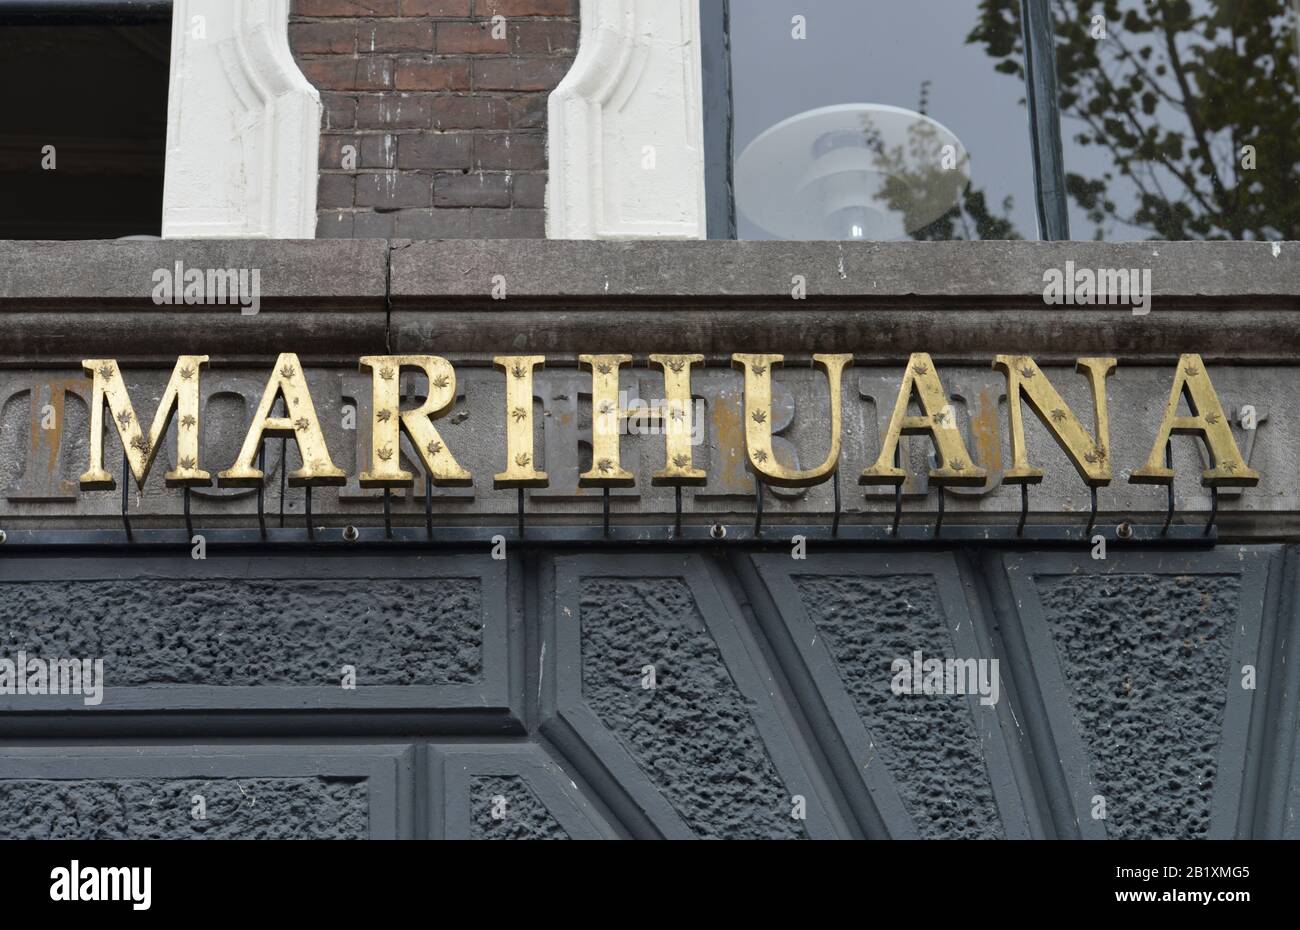 ´Hash Marihuana & Hemp Museum´, Oudezijds Achterburgwal, Amsterdam, Niederlande Stock Photo